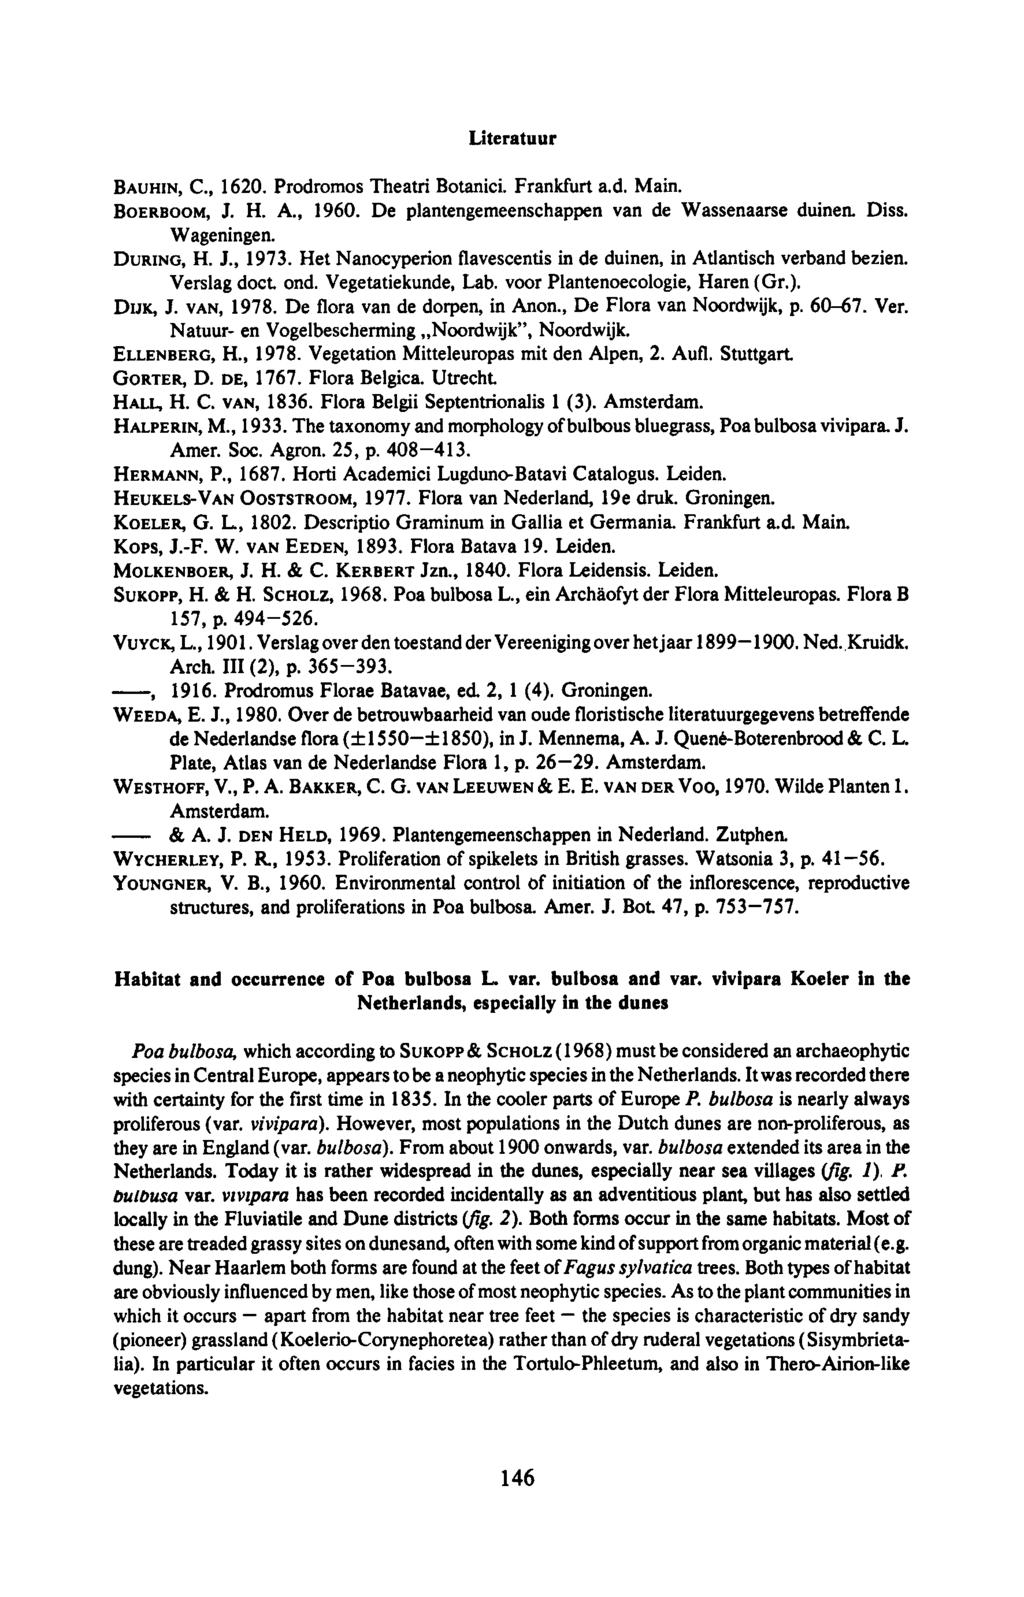 , Liteatuu BAUHIN, C., BOERBOOM, 160. Podomos Theati Botanici. Fankfut a.d. Main. J. H. A., 1960. De plantengemeenschappen van de Wassenaase duinen. Diss. Wageningen. DURING, H. J., 1973.